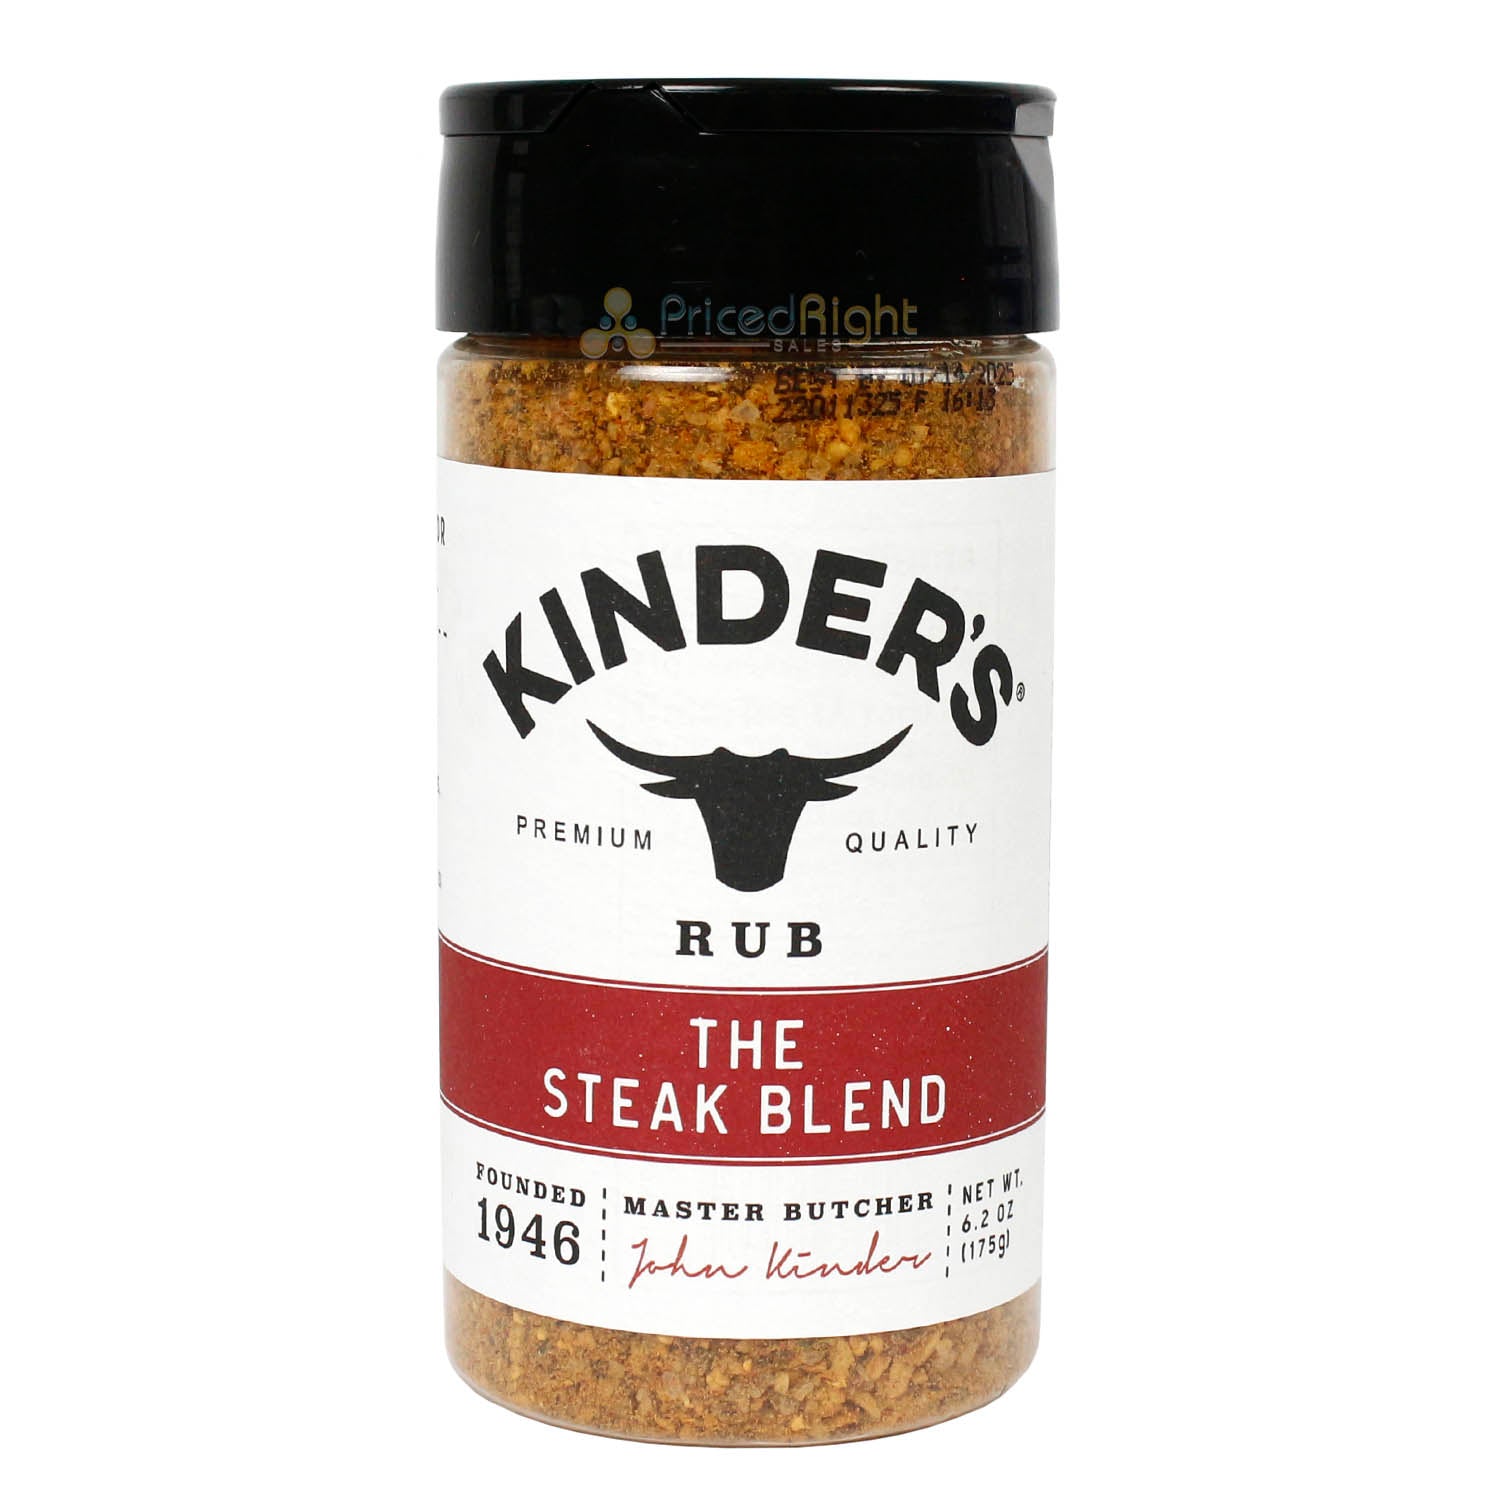 Kinder's Steak Blend Dry Rub Seasoning Premium Quality Beef Chicken Pork 6.2 oz